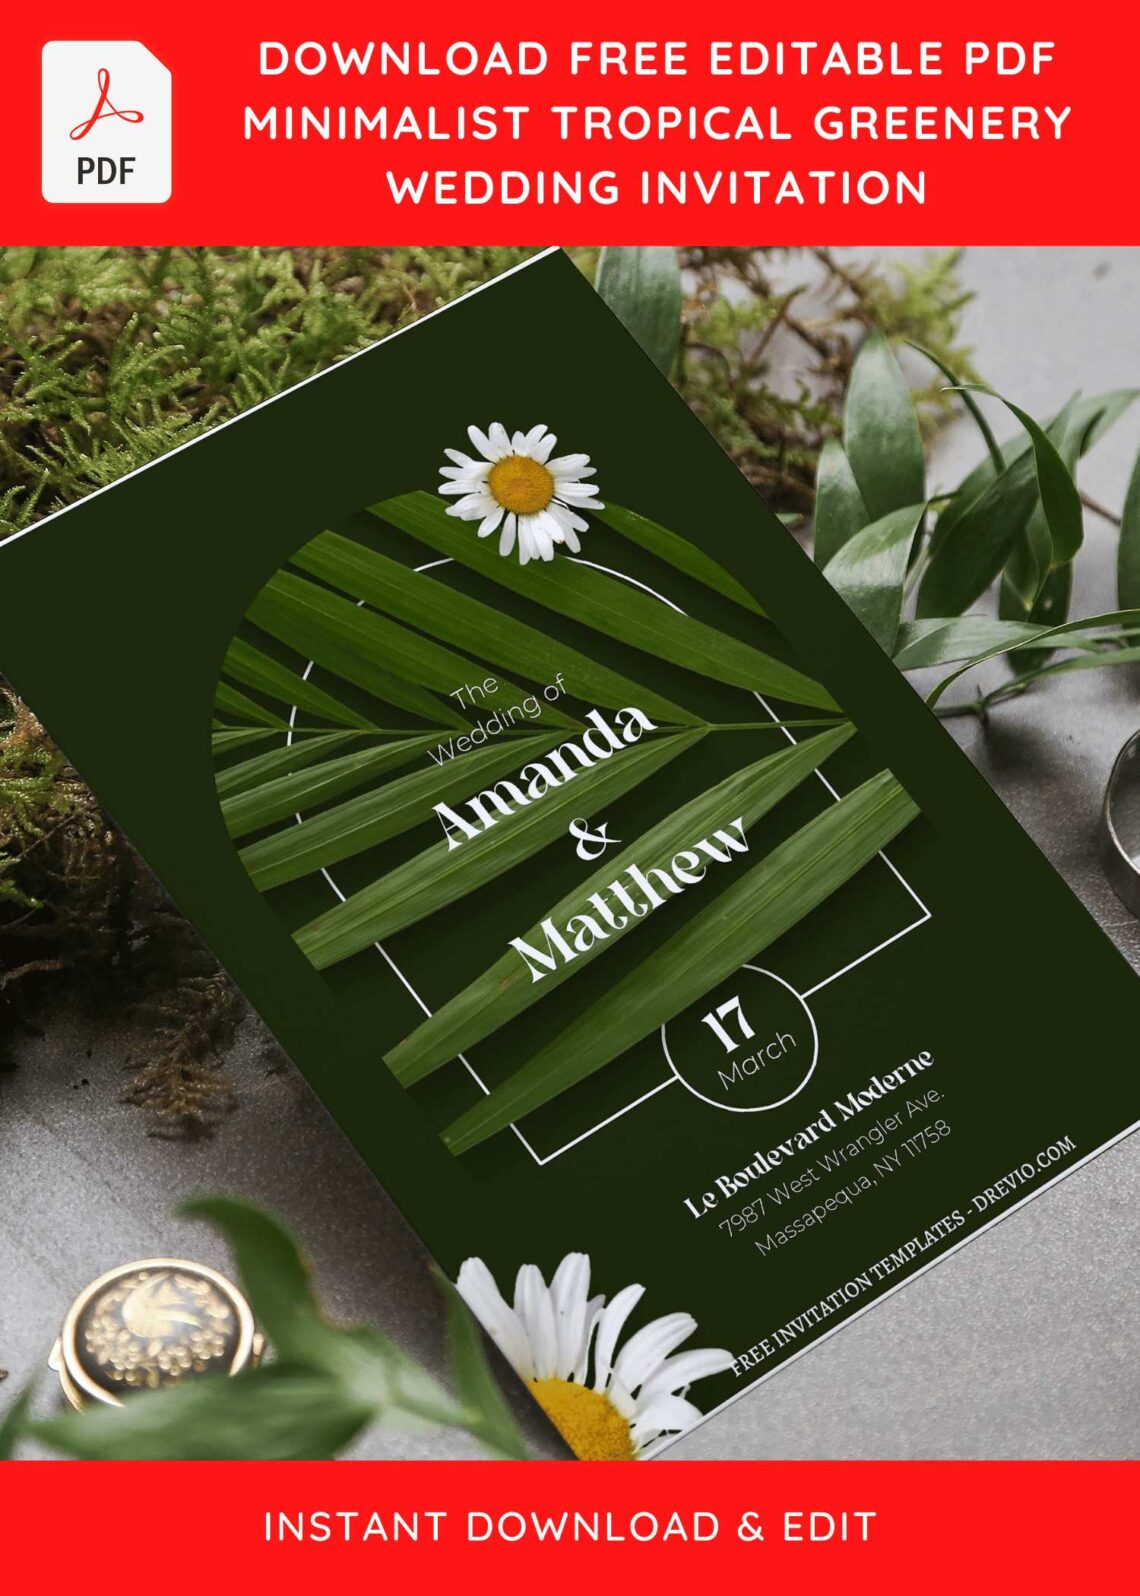 (Free Editable PDF) Stylish Tropical Foliage Wedding Invitation Templates with Gerbera daisy